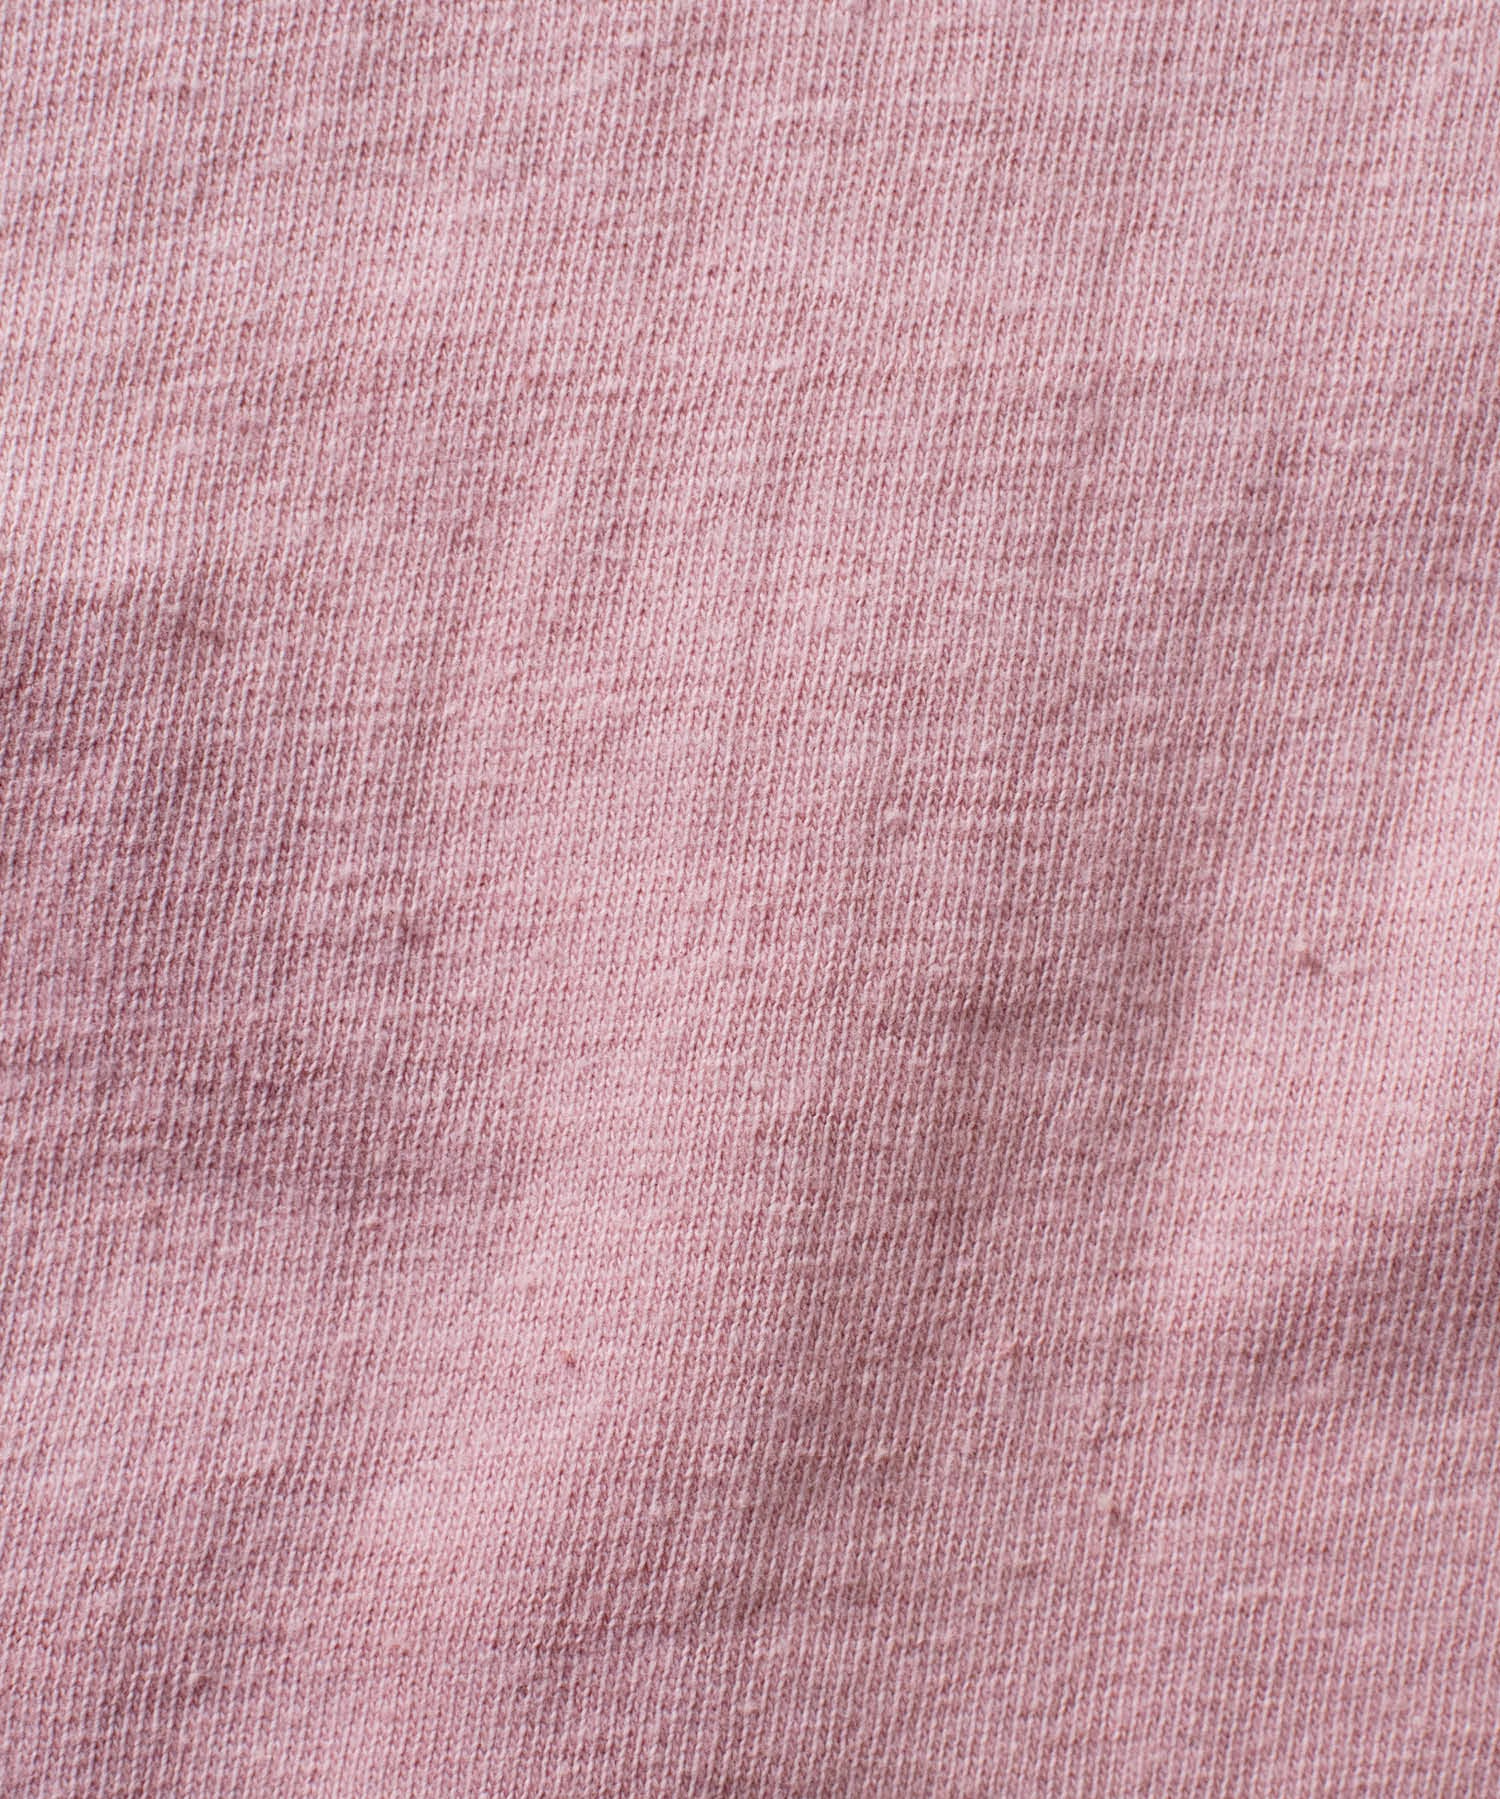 Recycle Organic Cotton Bayberry Dye Tee - Mummy Pappy | リサイクルオーガニックコットン ヤマモモ染めTシャツ | ボタニカルダイ | 草木染め | 清水将司 | MASASHI SHIMIZU